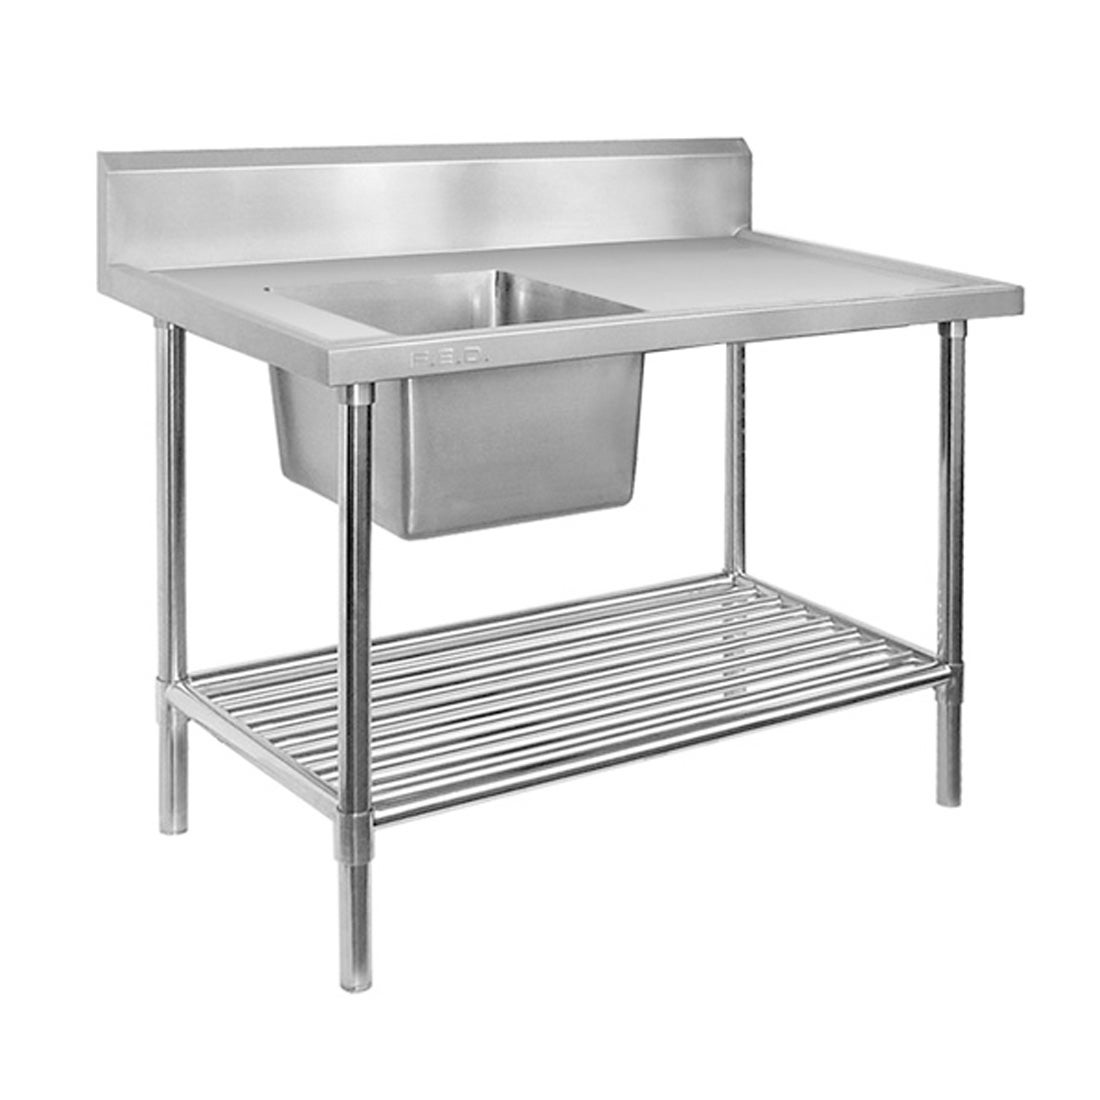 Comchef Single Left Sink Bench with Pot Undershelf SSB7-1800L/A